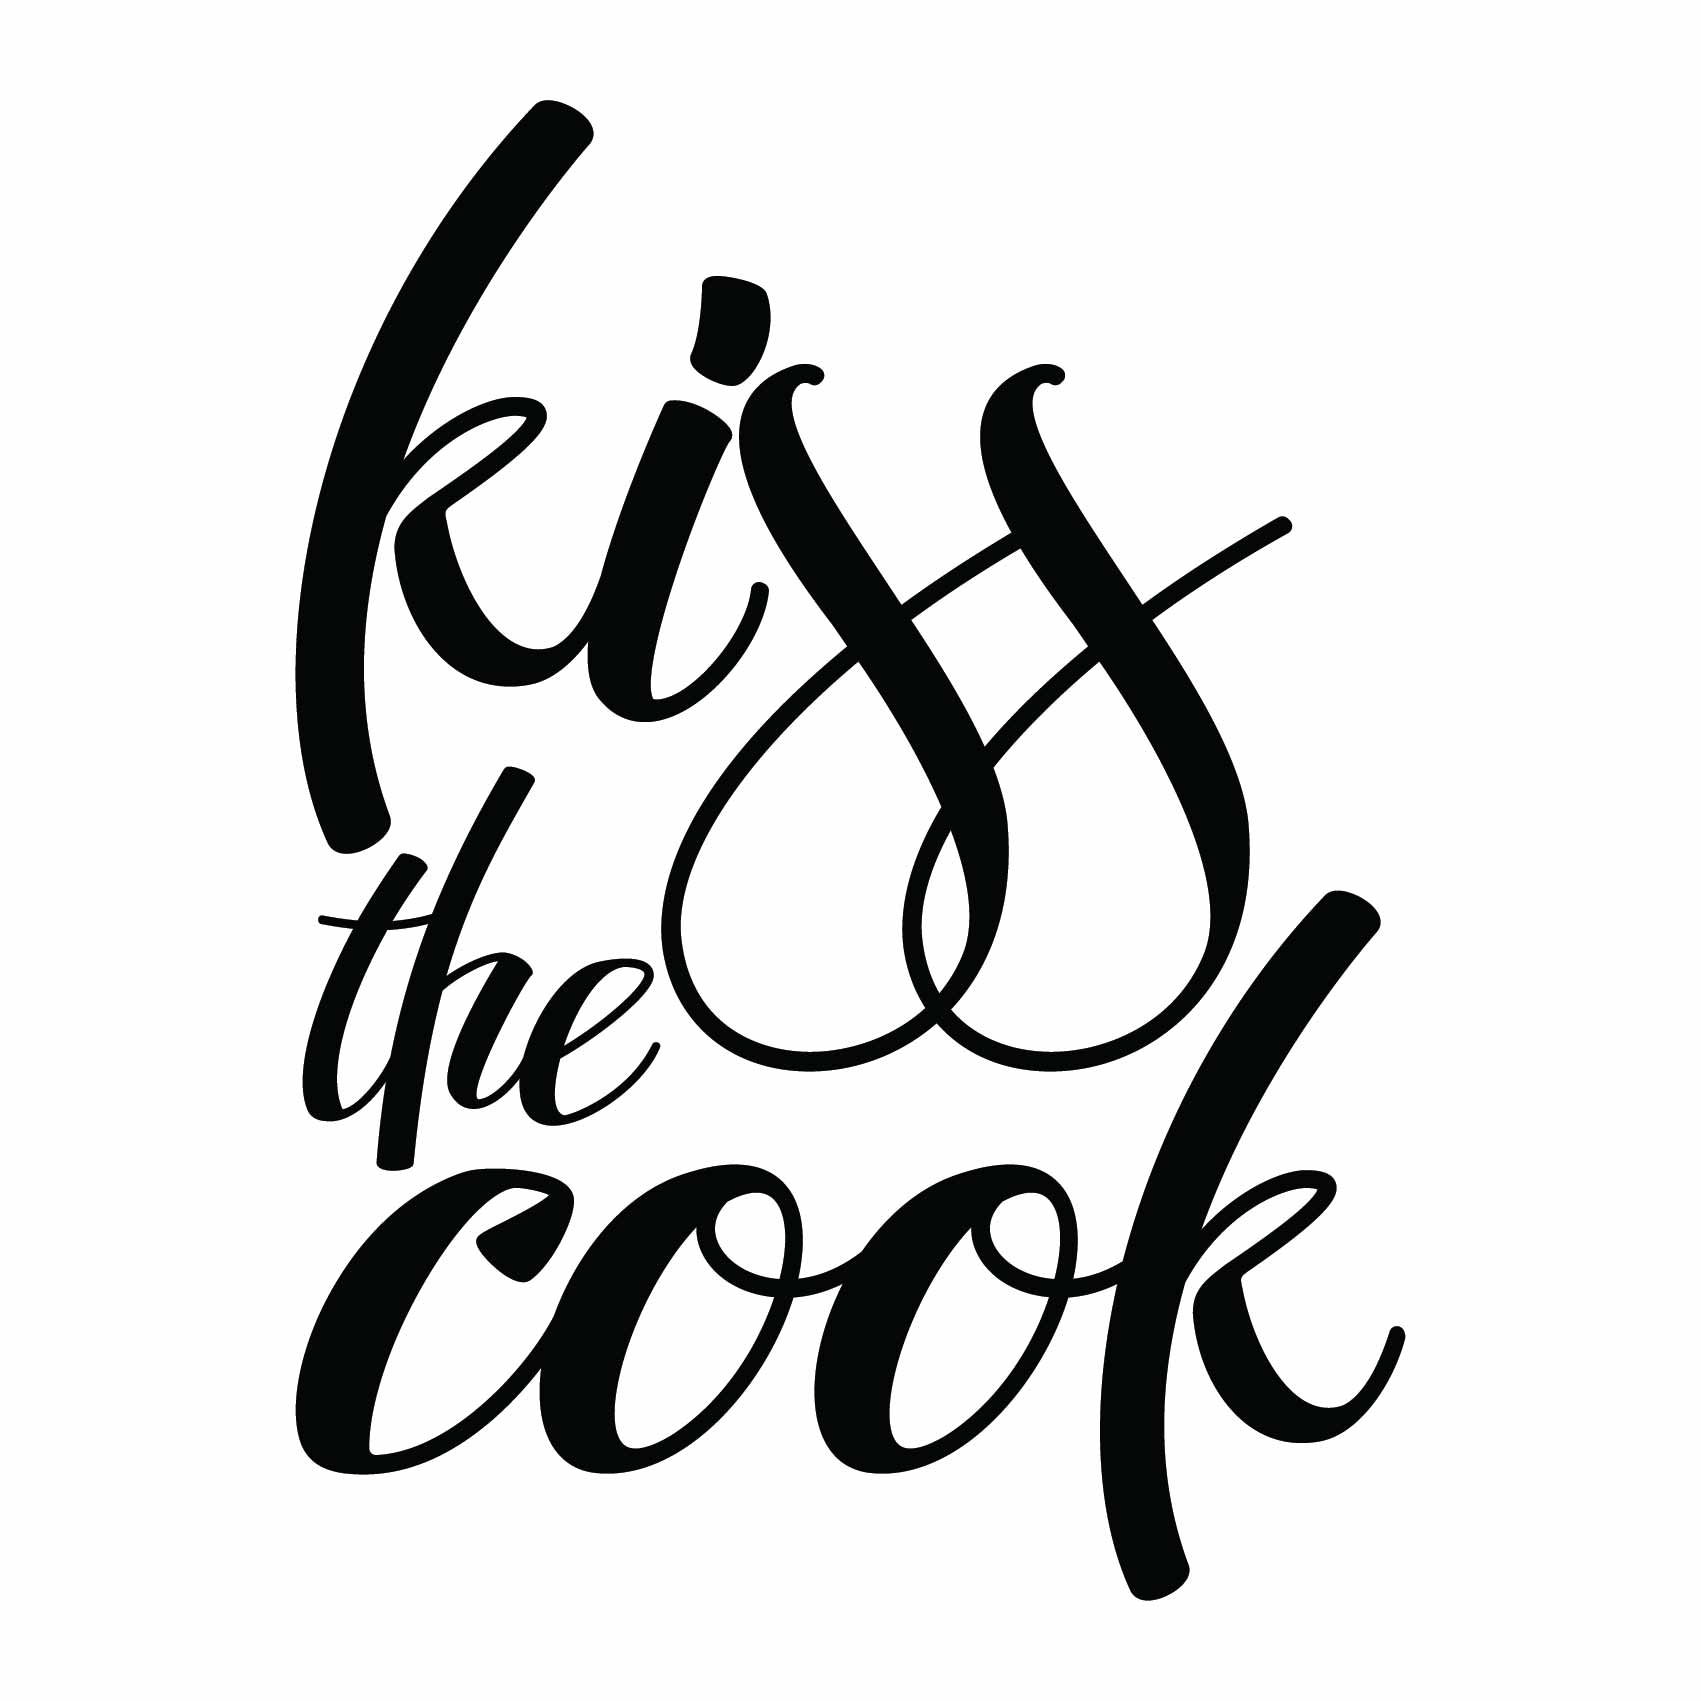 stickers-kiss-the-cook-ref53cuisine-stickers-muraux-cuisine-autocollant-deco-cuisine-chambre-salon-sticker-mural-decoration-(2)